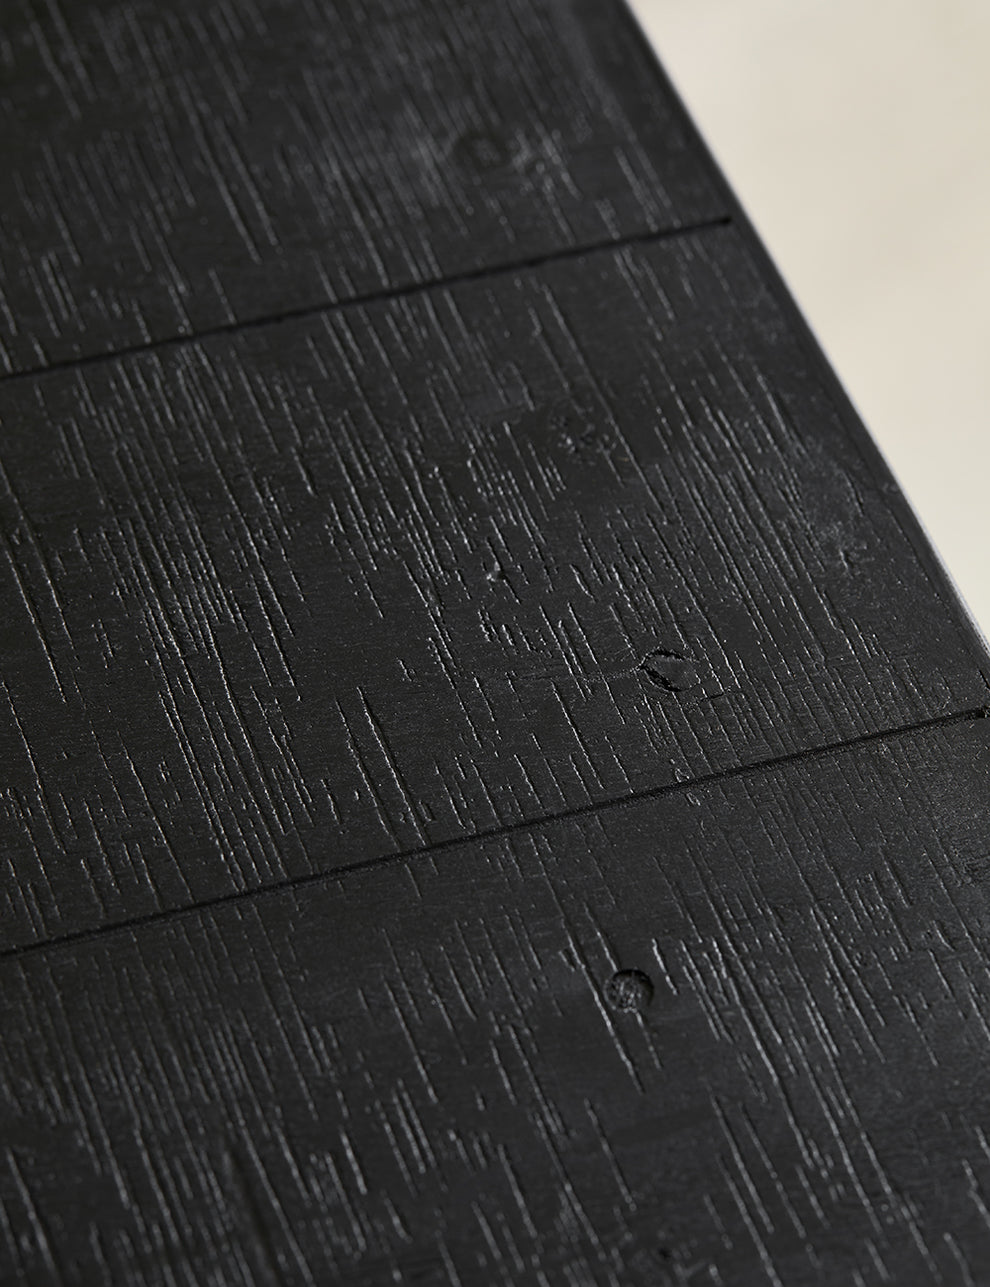 Nikko Black Wooden Small Sideboard top